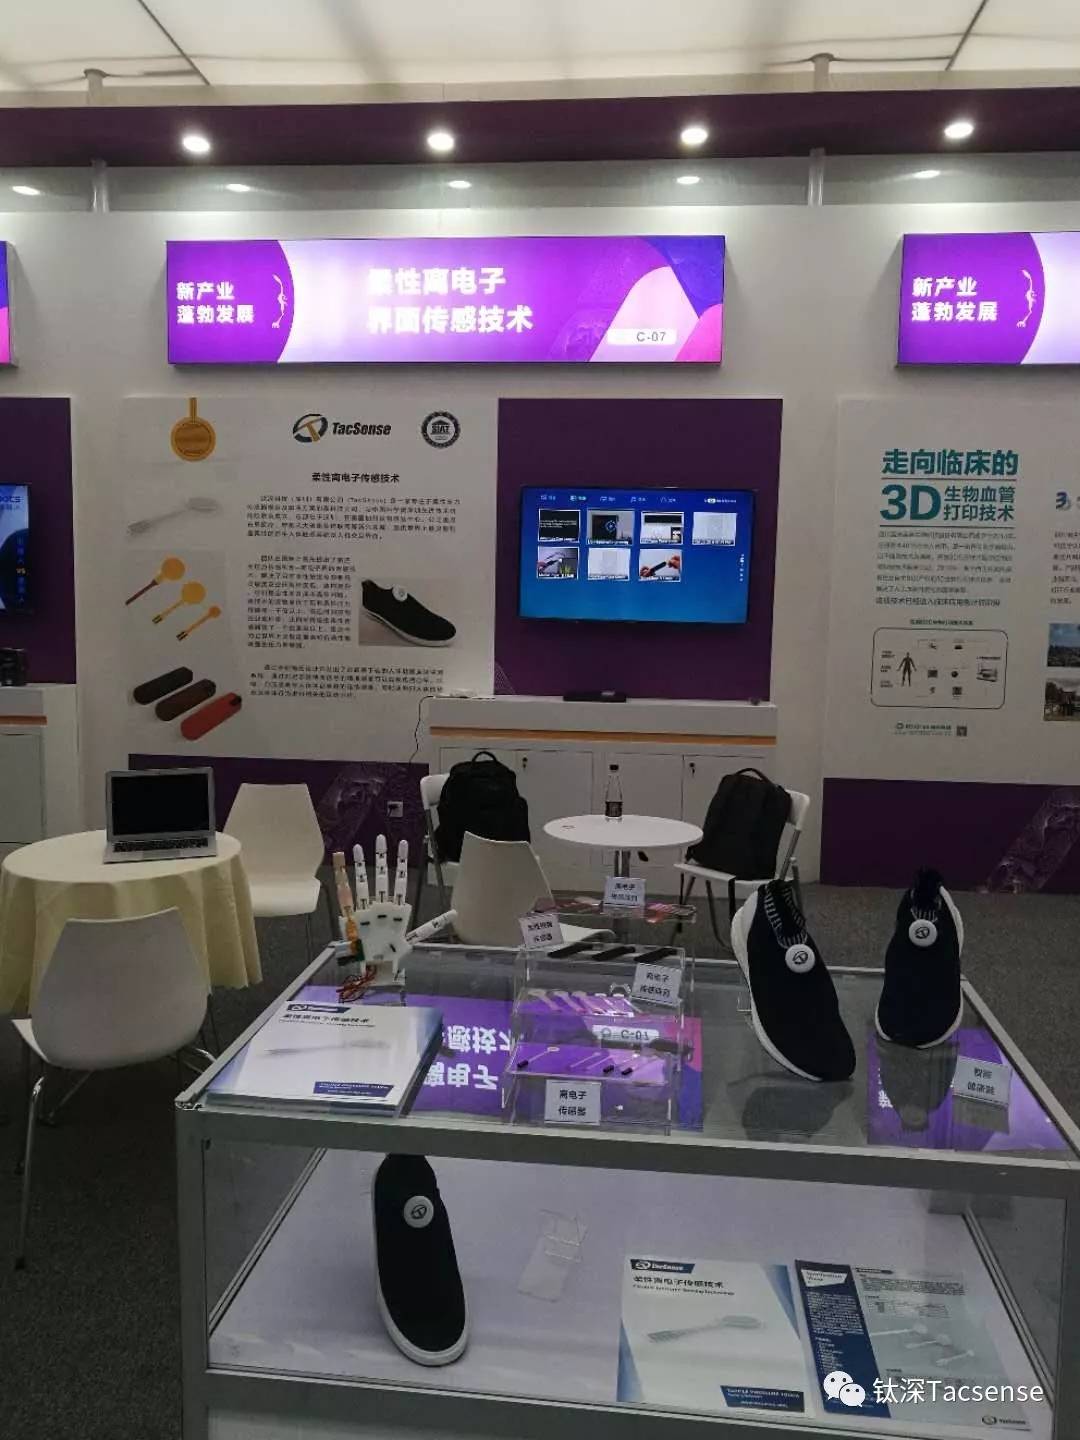 2018.10 Chengdu Double Innovation Exhibition